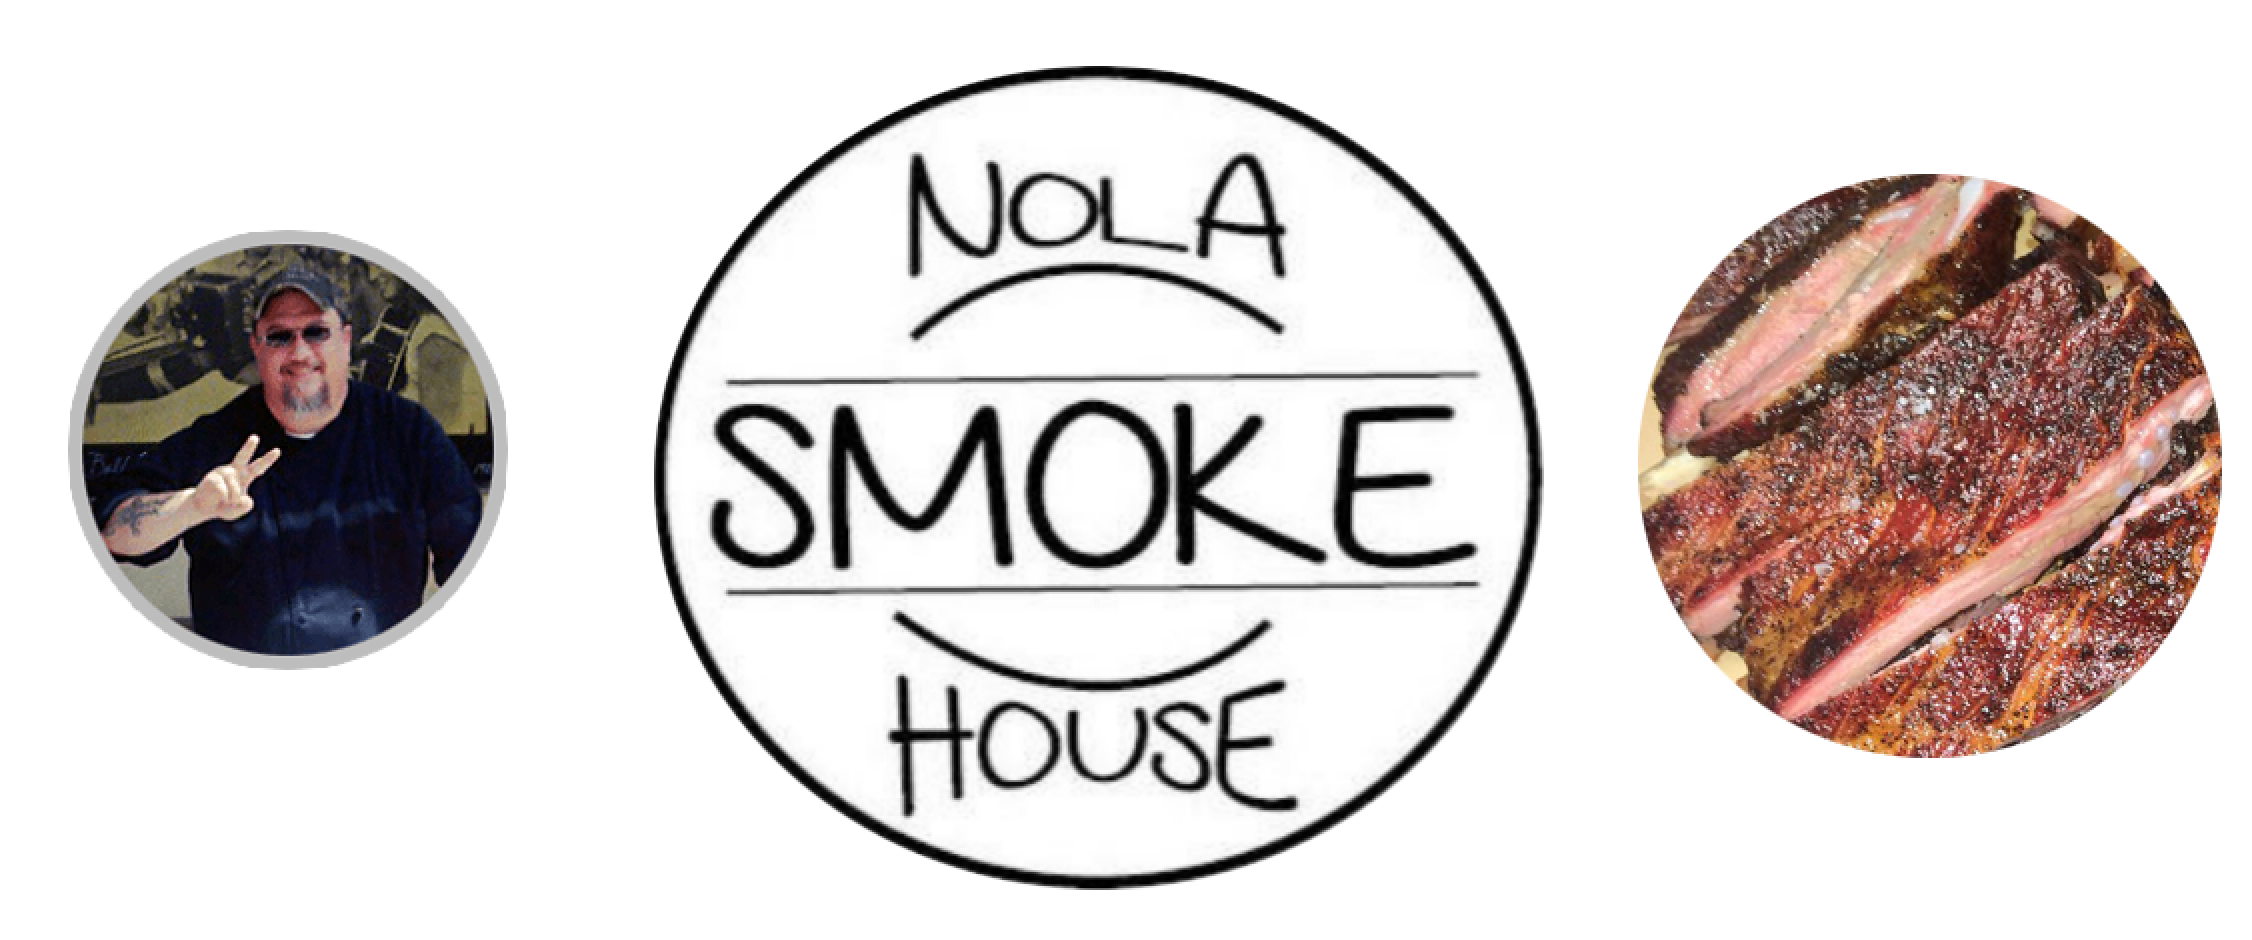 Nola Smokehouse